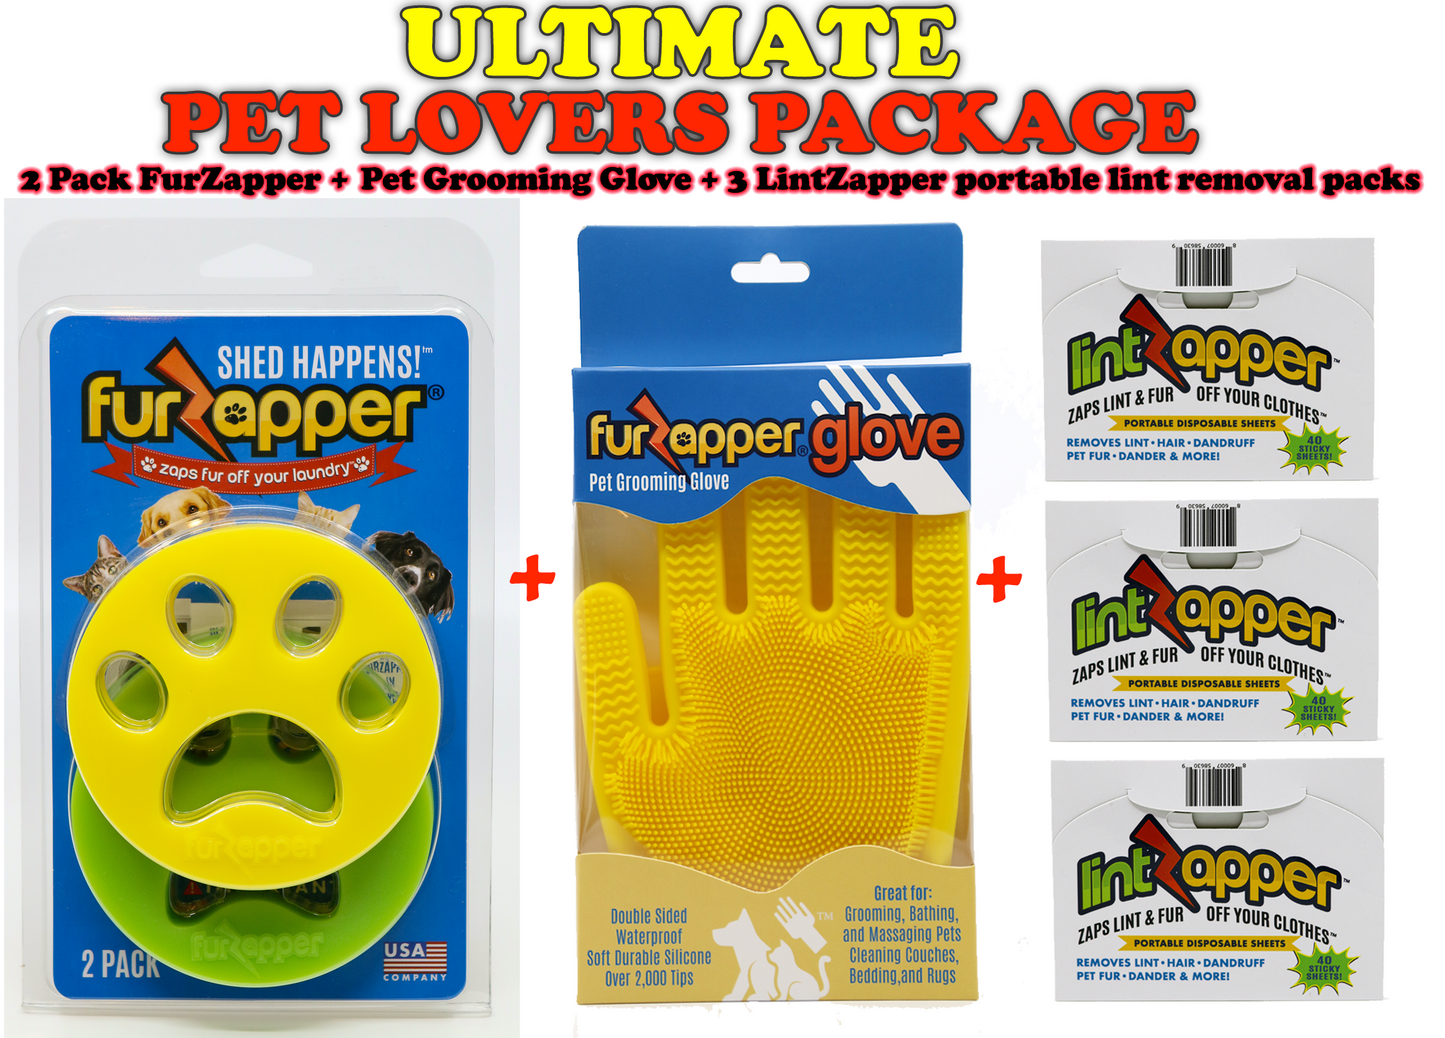 ULTIMATE PET OWNER BUNDLE - includes 2 FurZappers, 1 Grooming Glove, 3 LintZapper packs